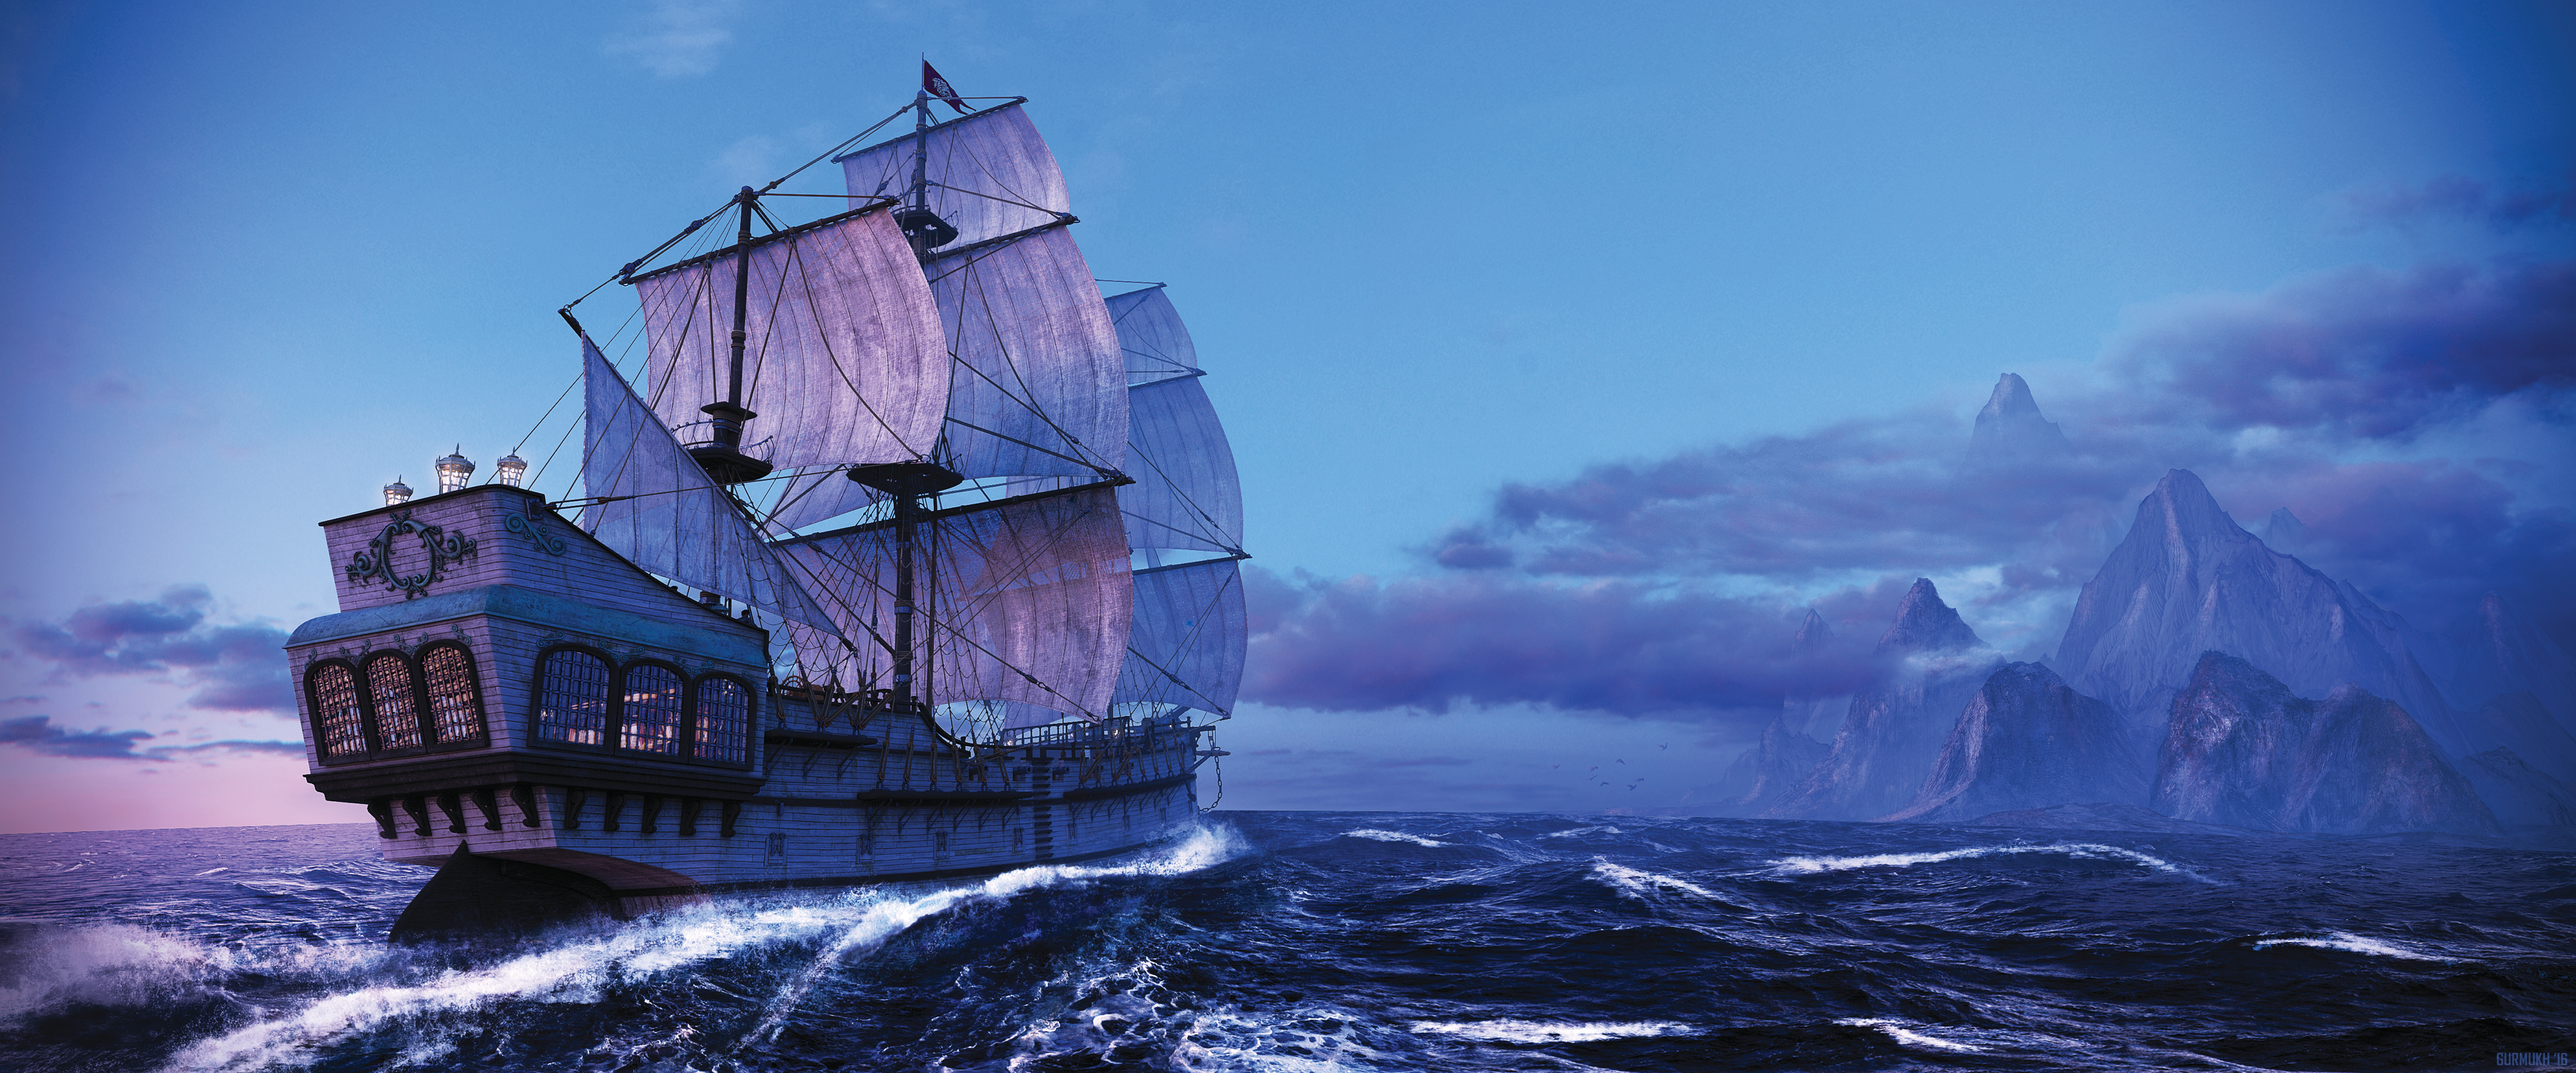 Maya Tutorial: Create A Pirate Ship | 3D Artist - Animation, Models ...